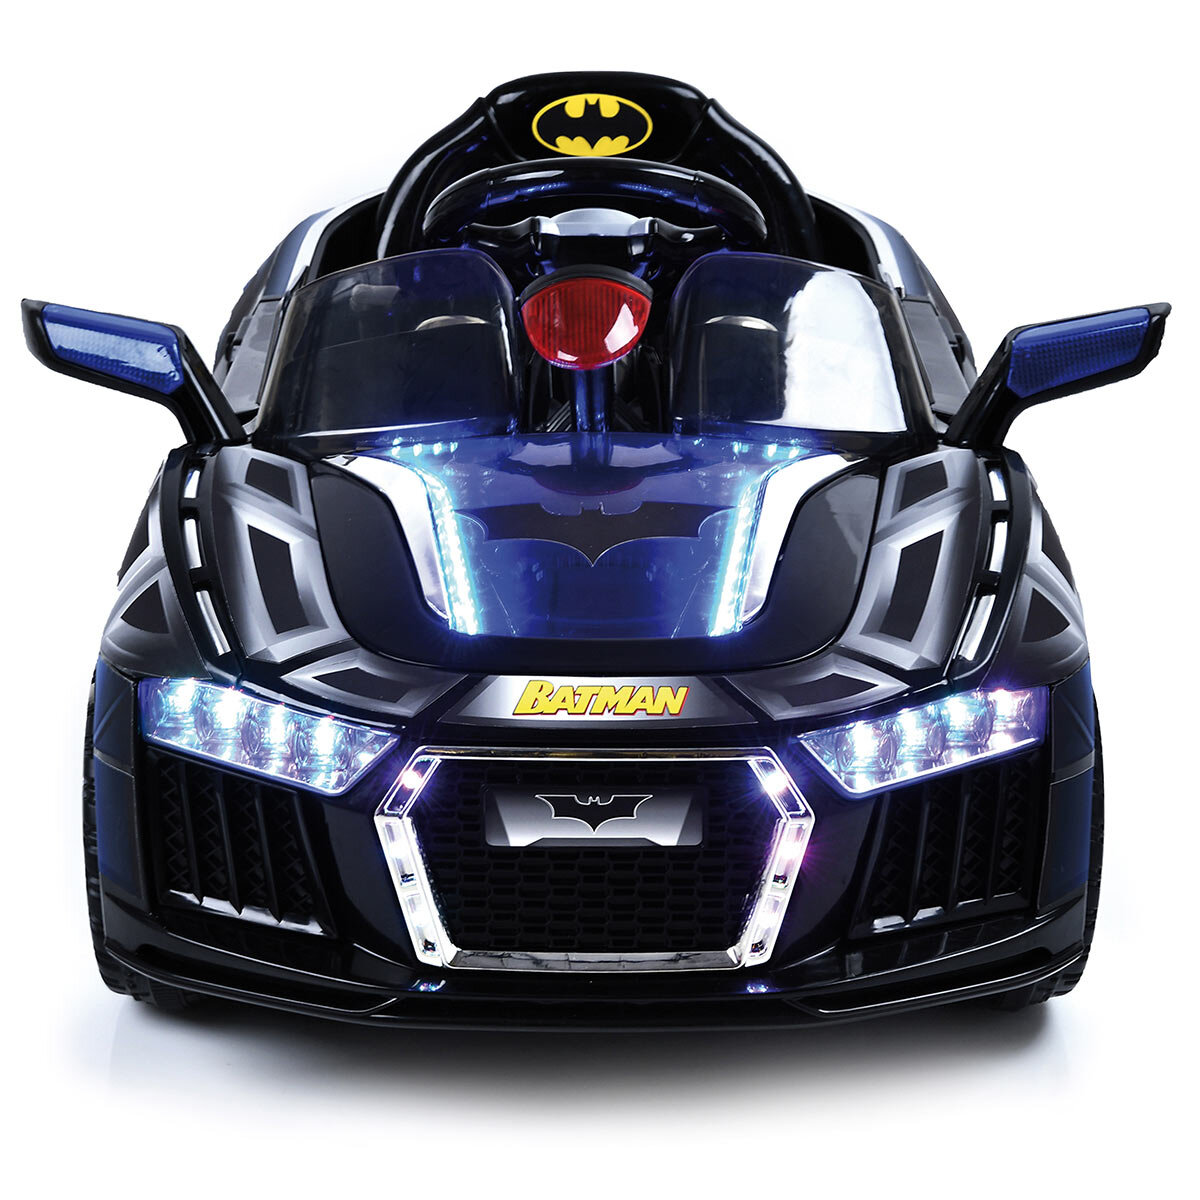 Buy E-Batmobile Feature5 Image at Costco.co.uk